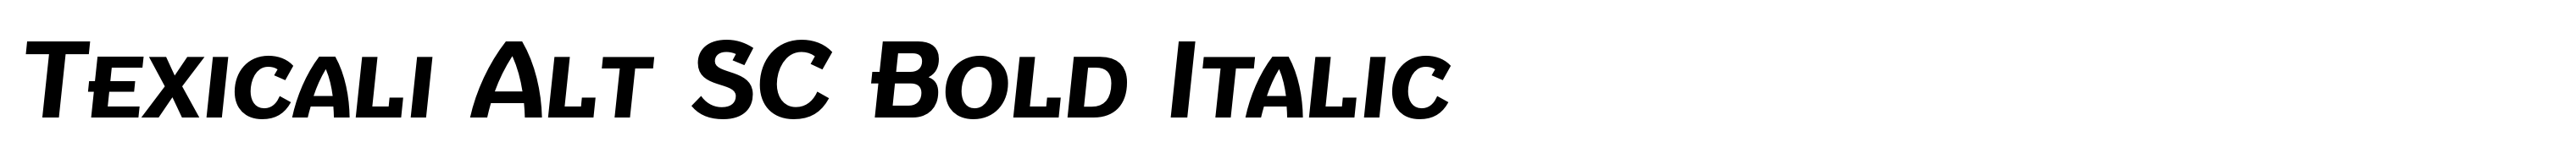 Texicali Alt SC Bold Italic